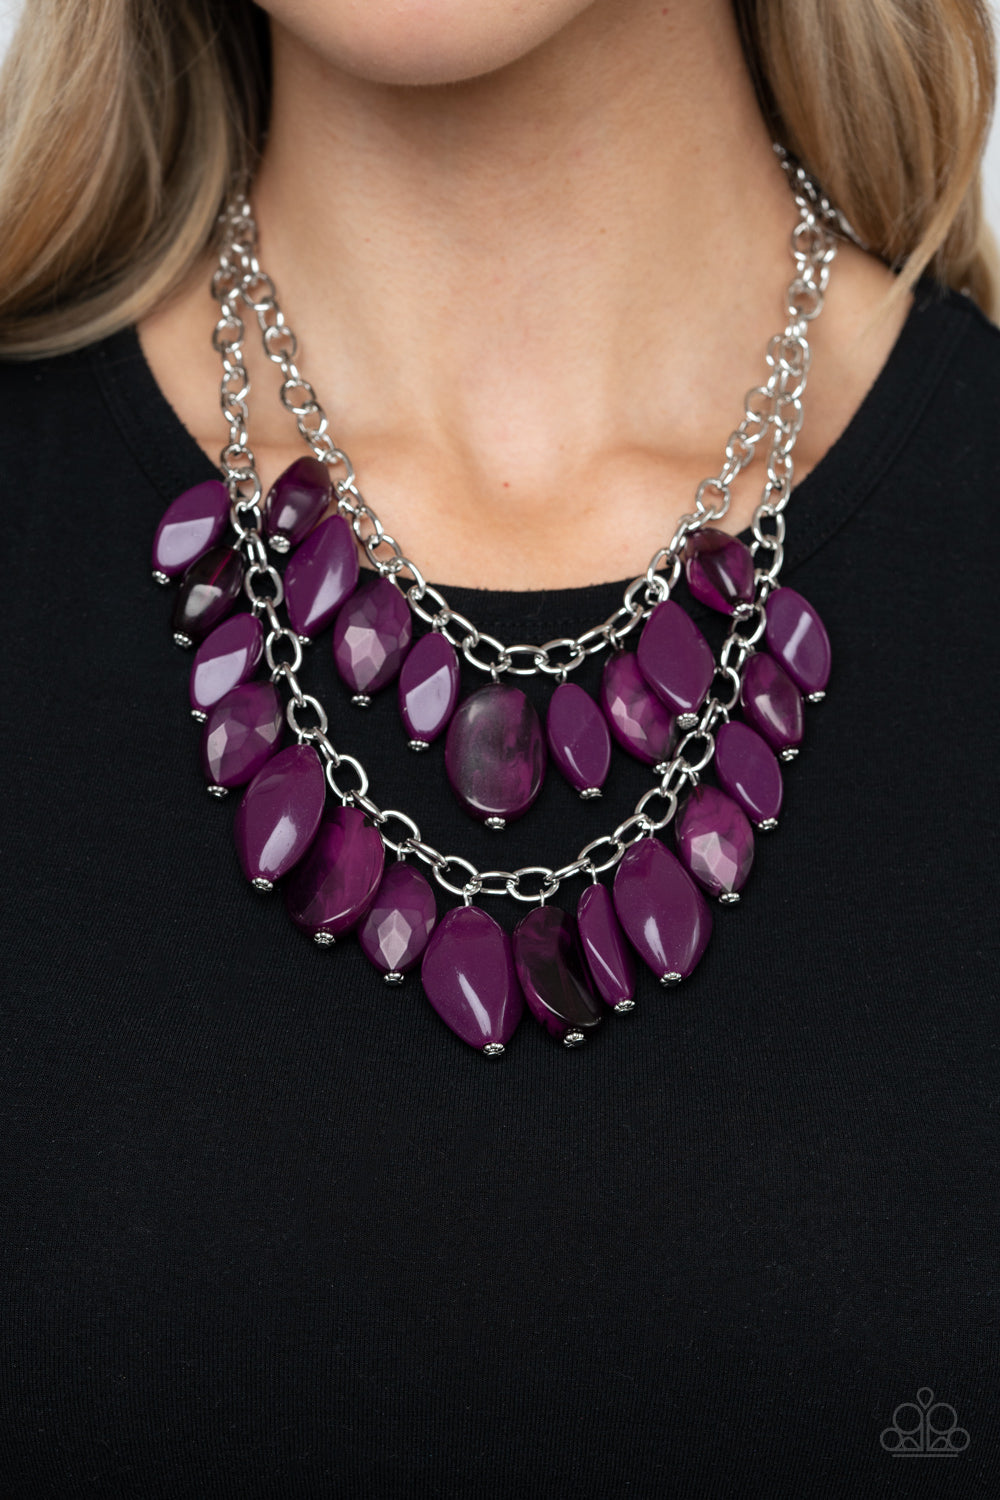 Paparazzi Palm Beach Beauty - Purple - Necklace & Earrings - $5 Jewelry with Ashley Swint